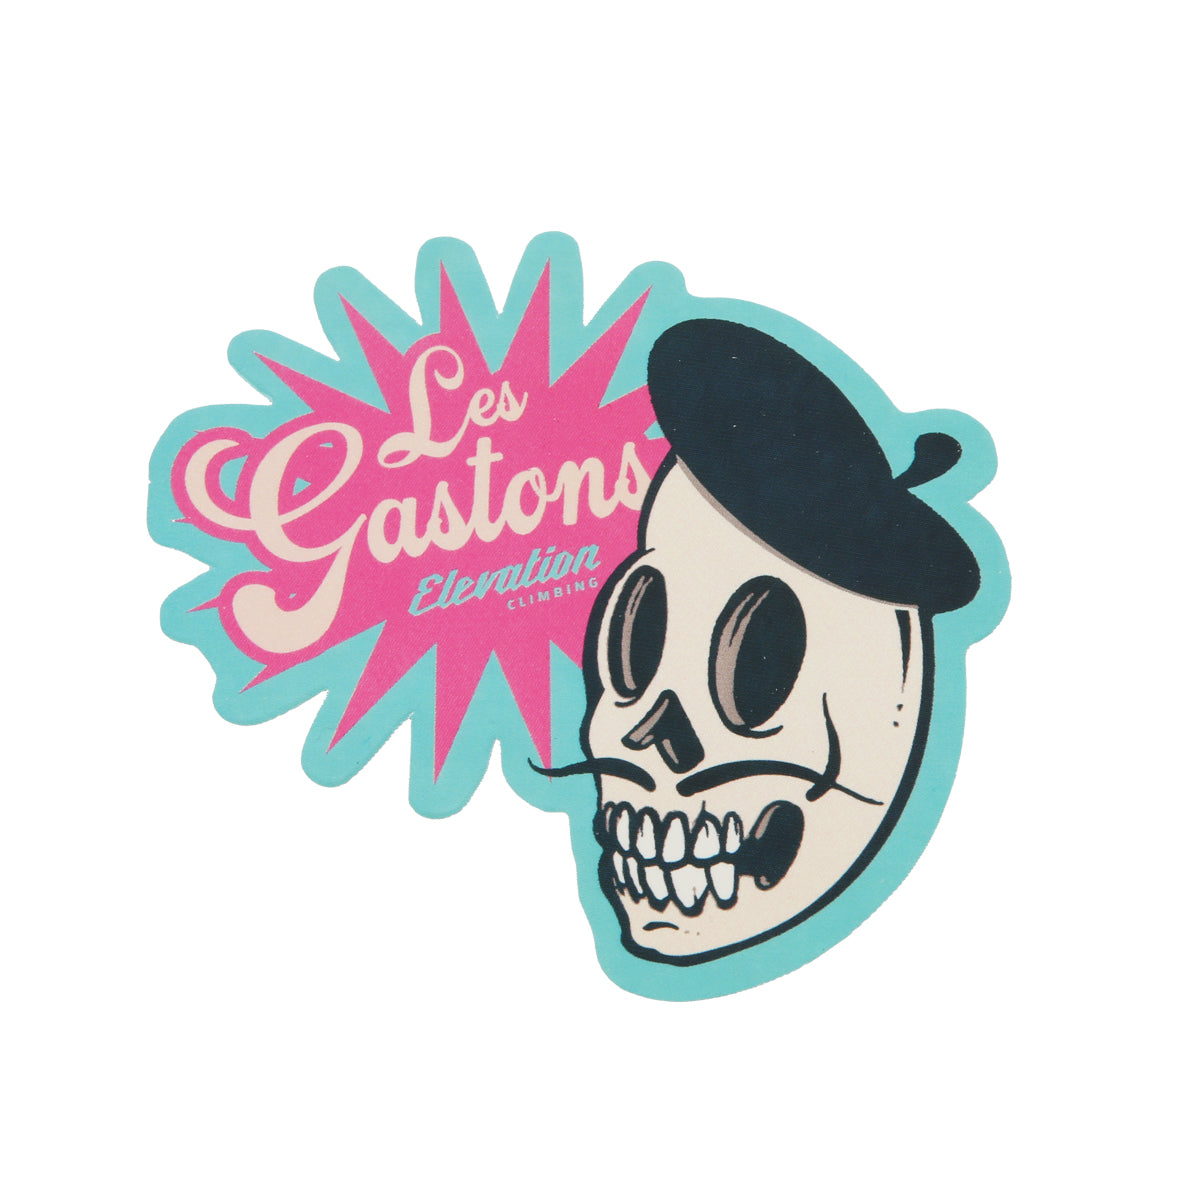 Elevation Sticker - Les Gastones